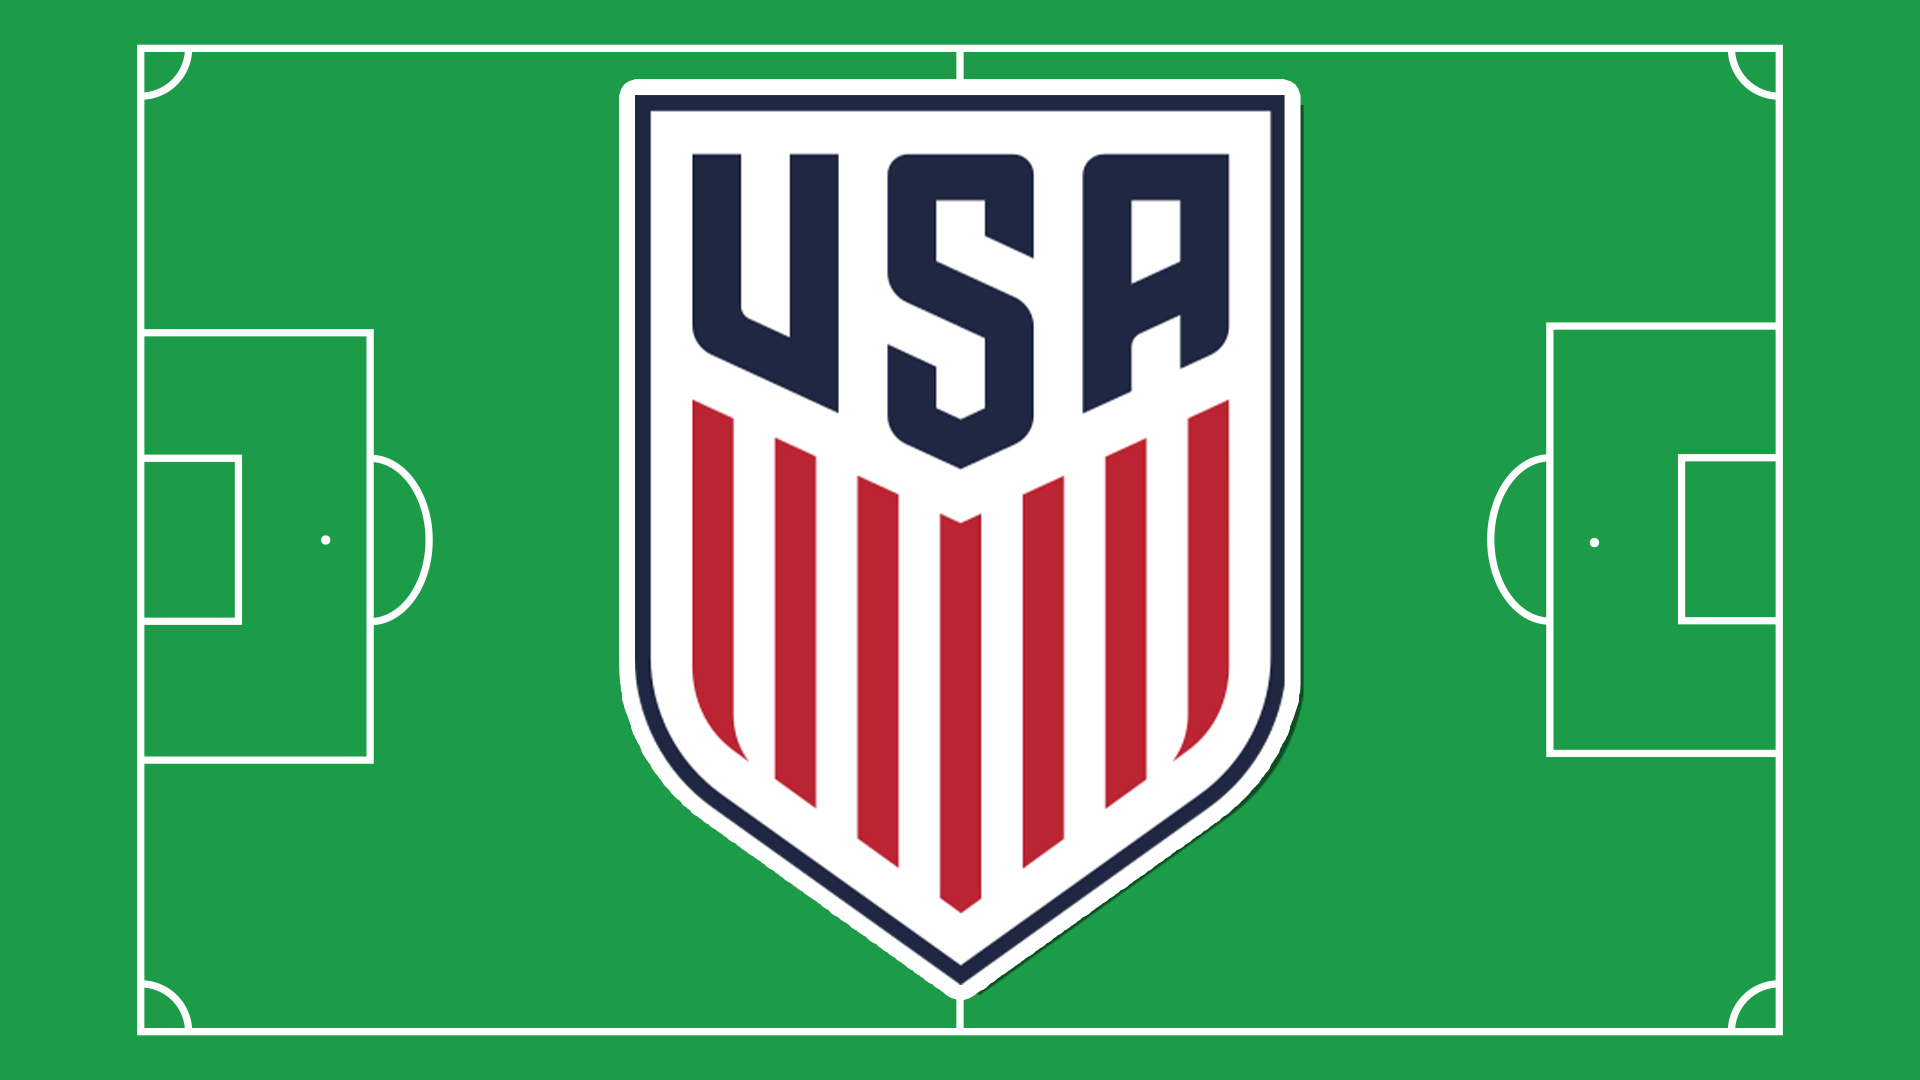 The USA football team badge 